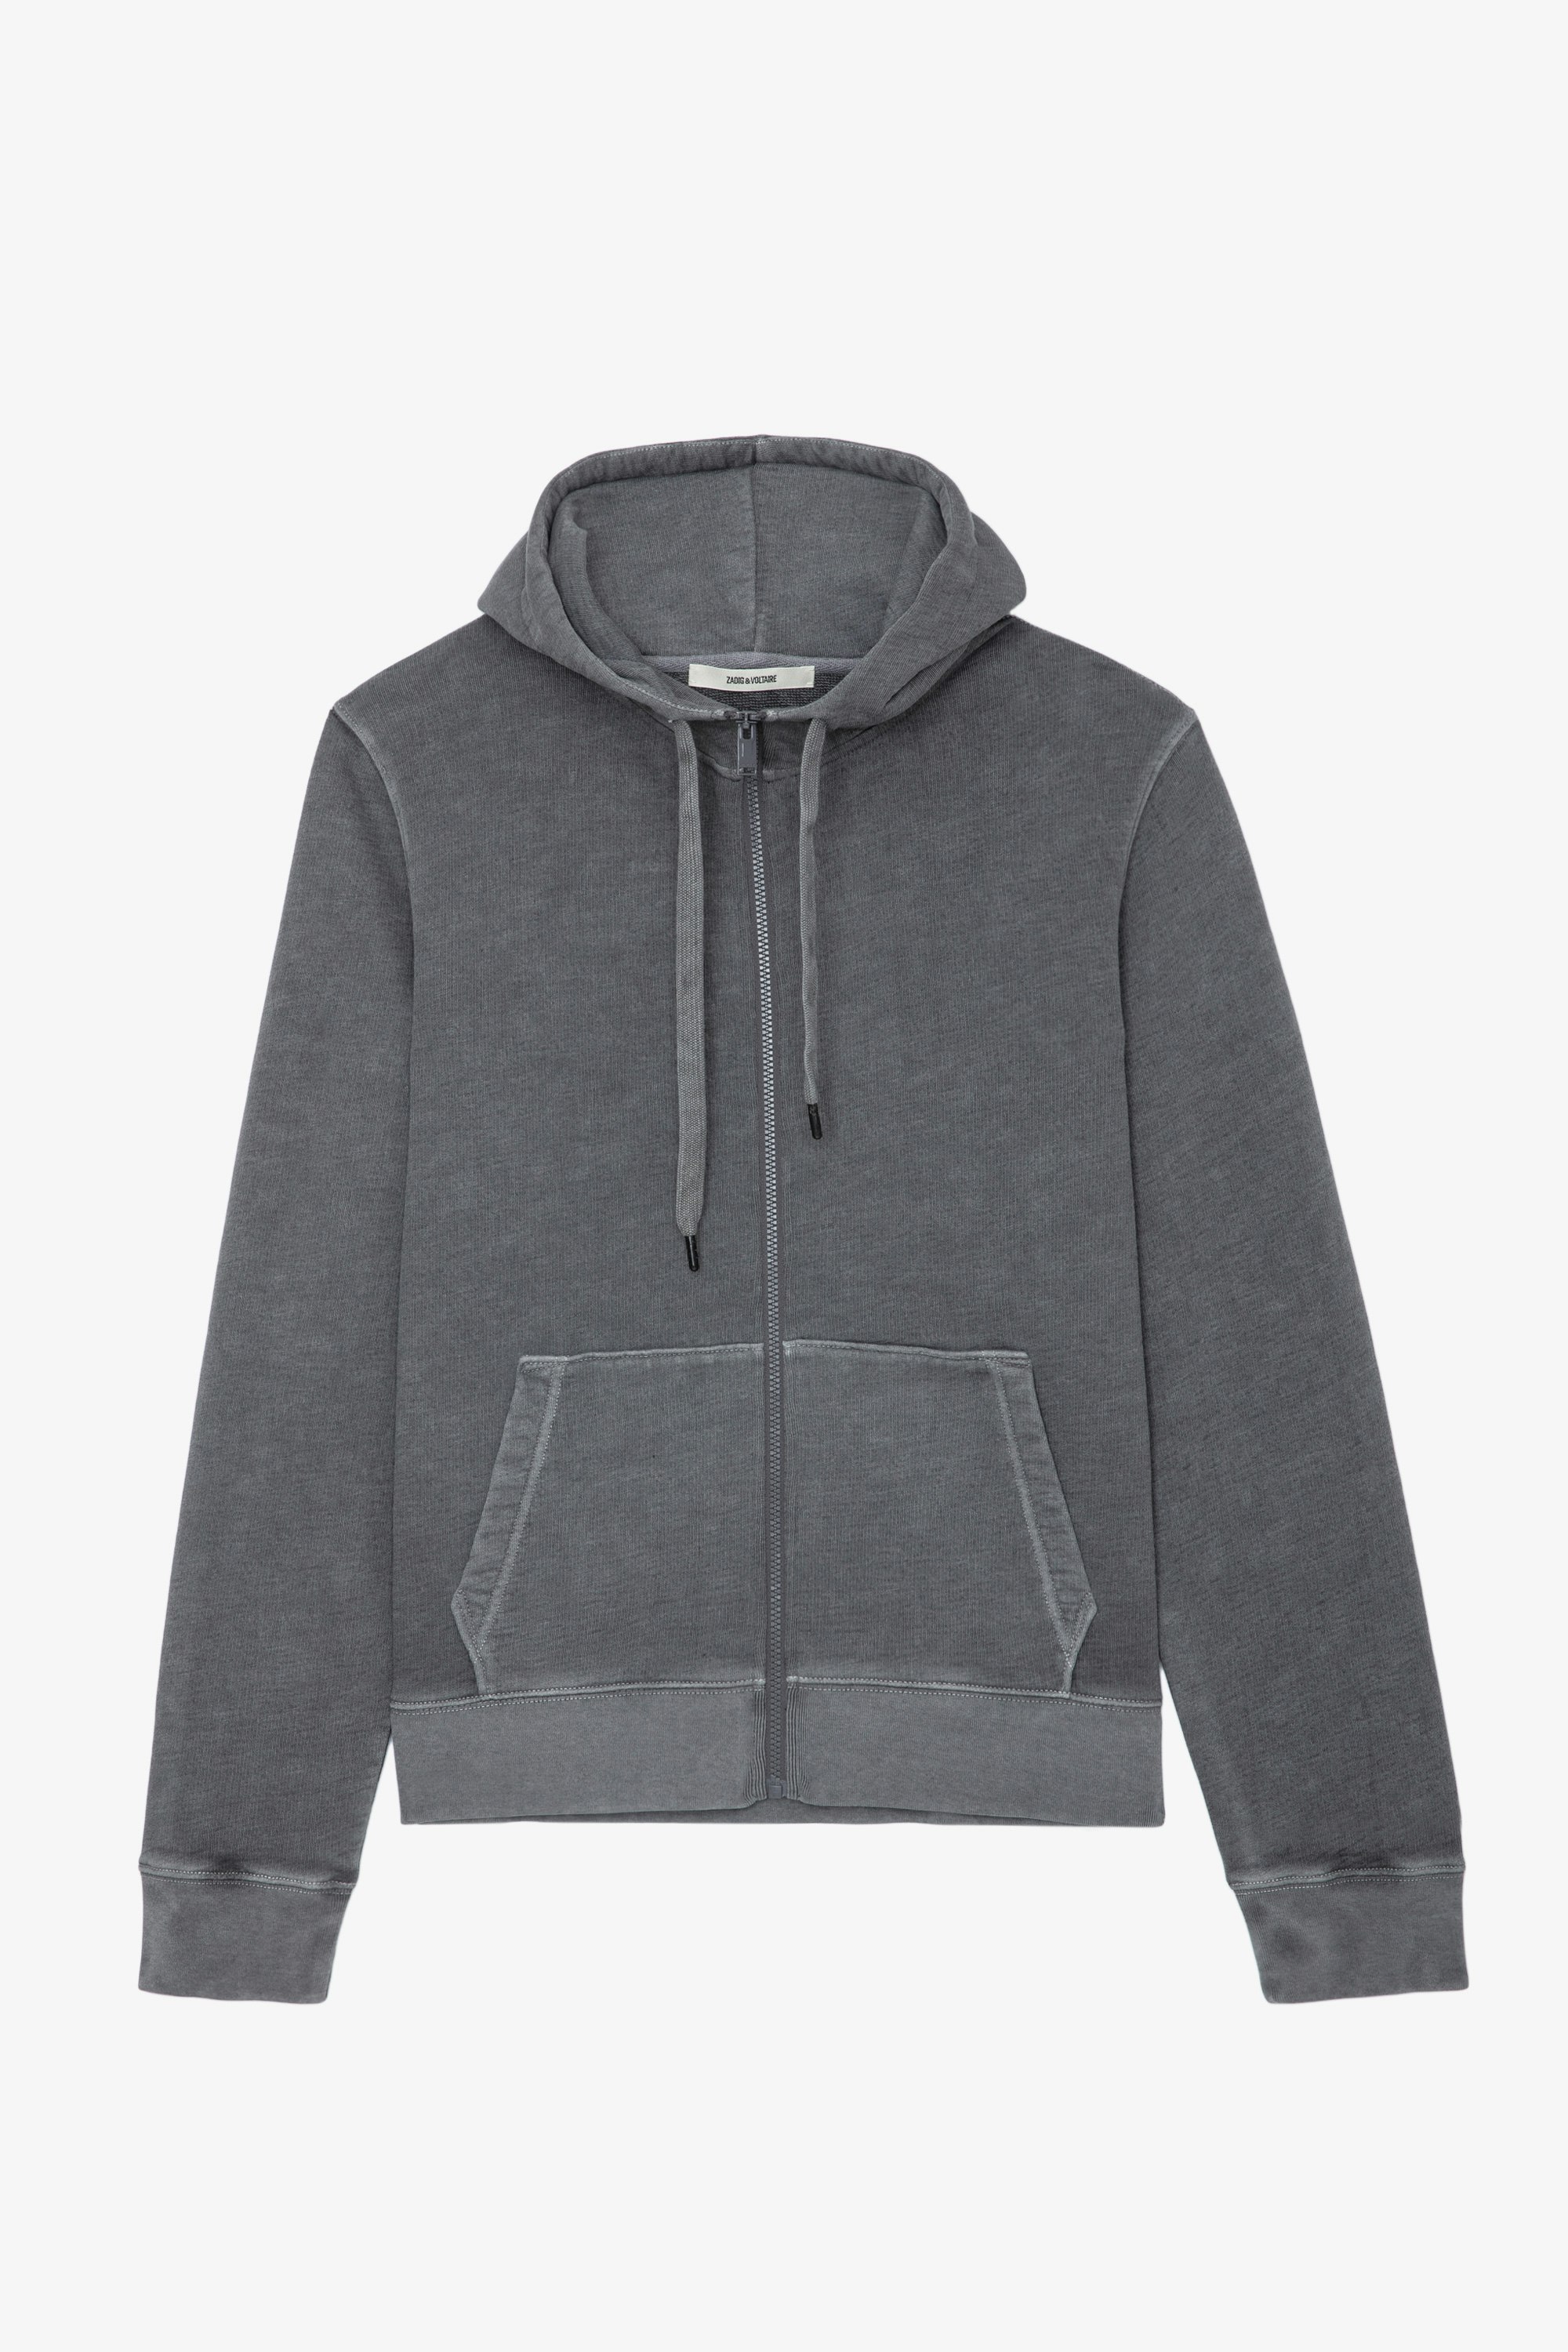 Alex Skull Sweatshirt - Grey cotton fleece hooded zip-up sweatshirt with pocket and Skull XO patch.